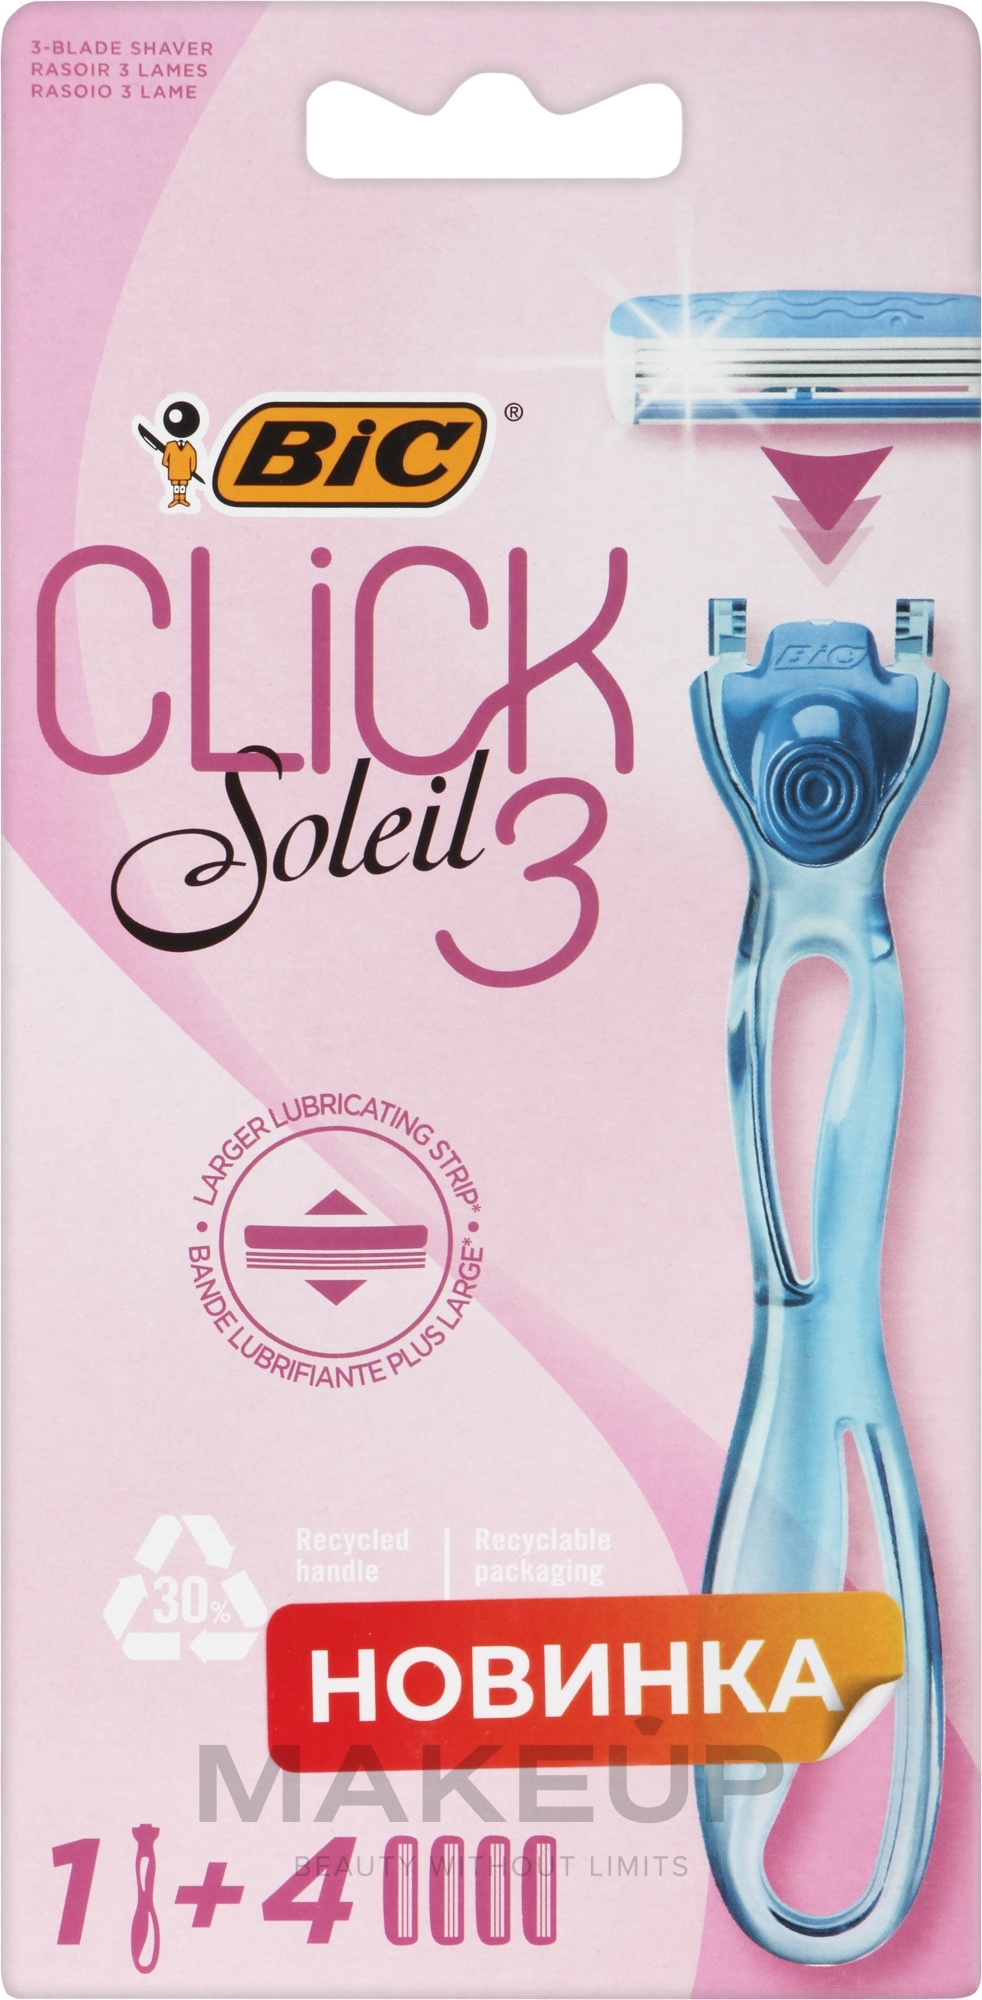 Damenrasierer mit 4 Ersatzklingen - Bic Click 3 Soleil Sensitive — Bild 4 St.